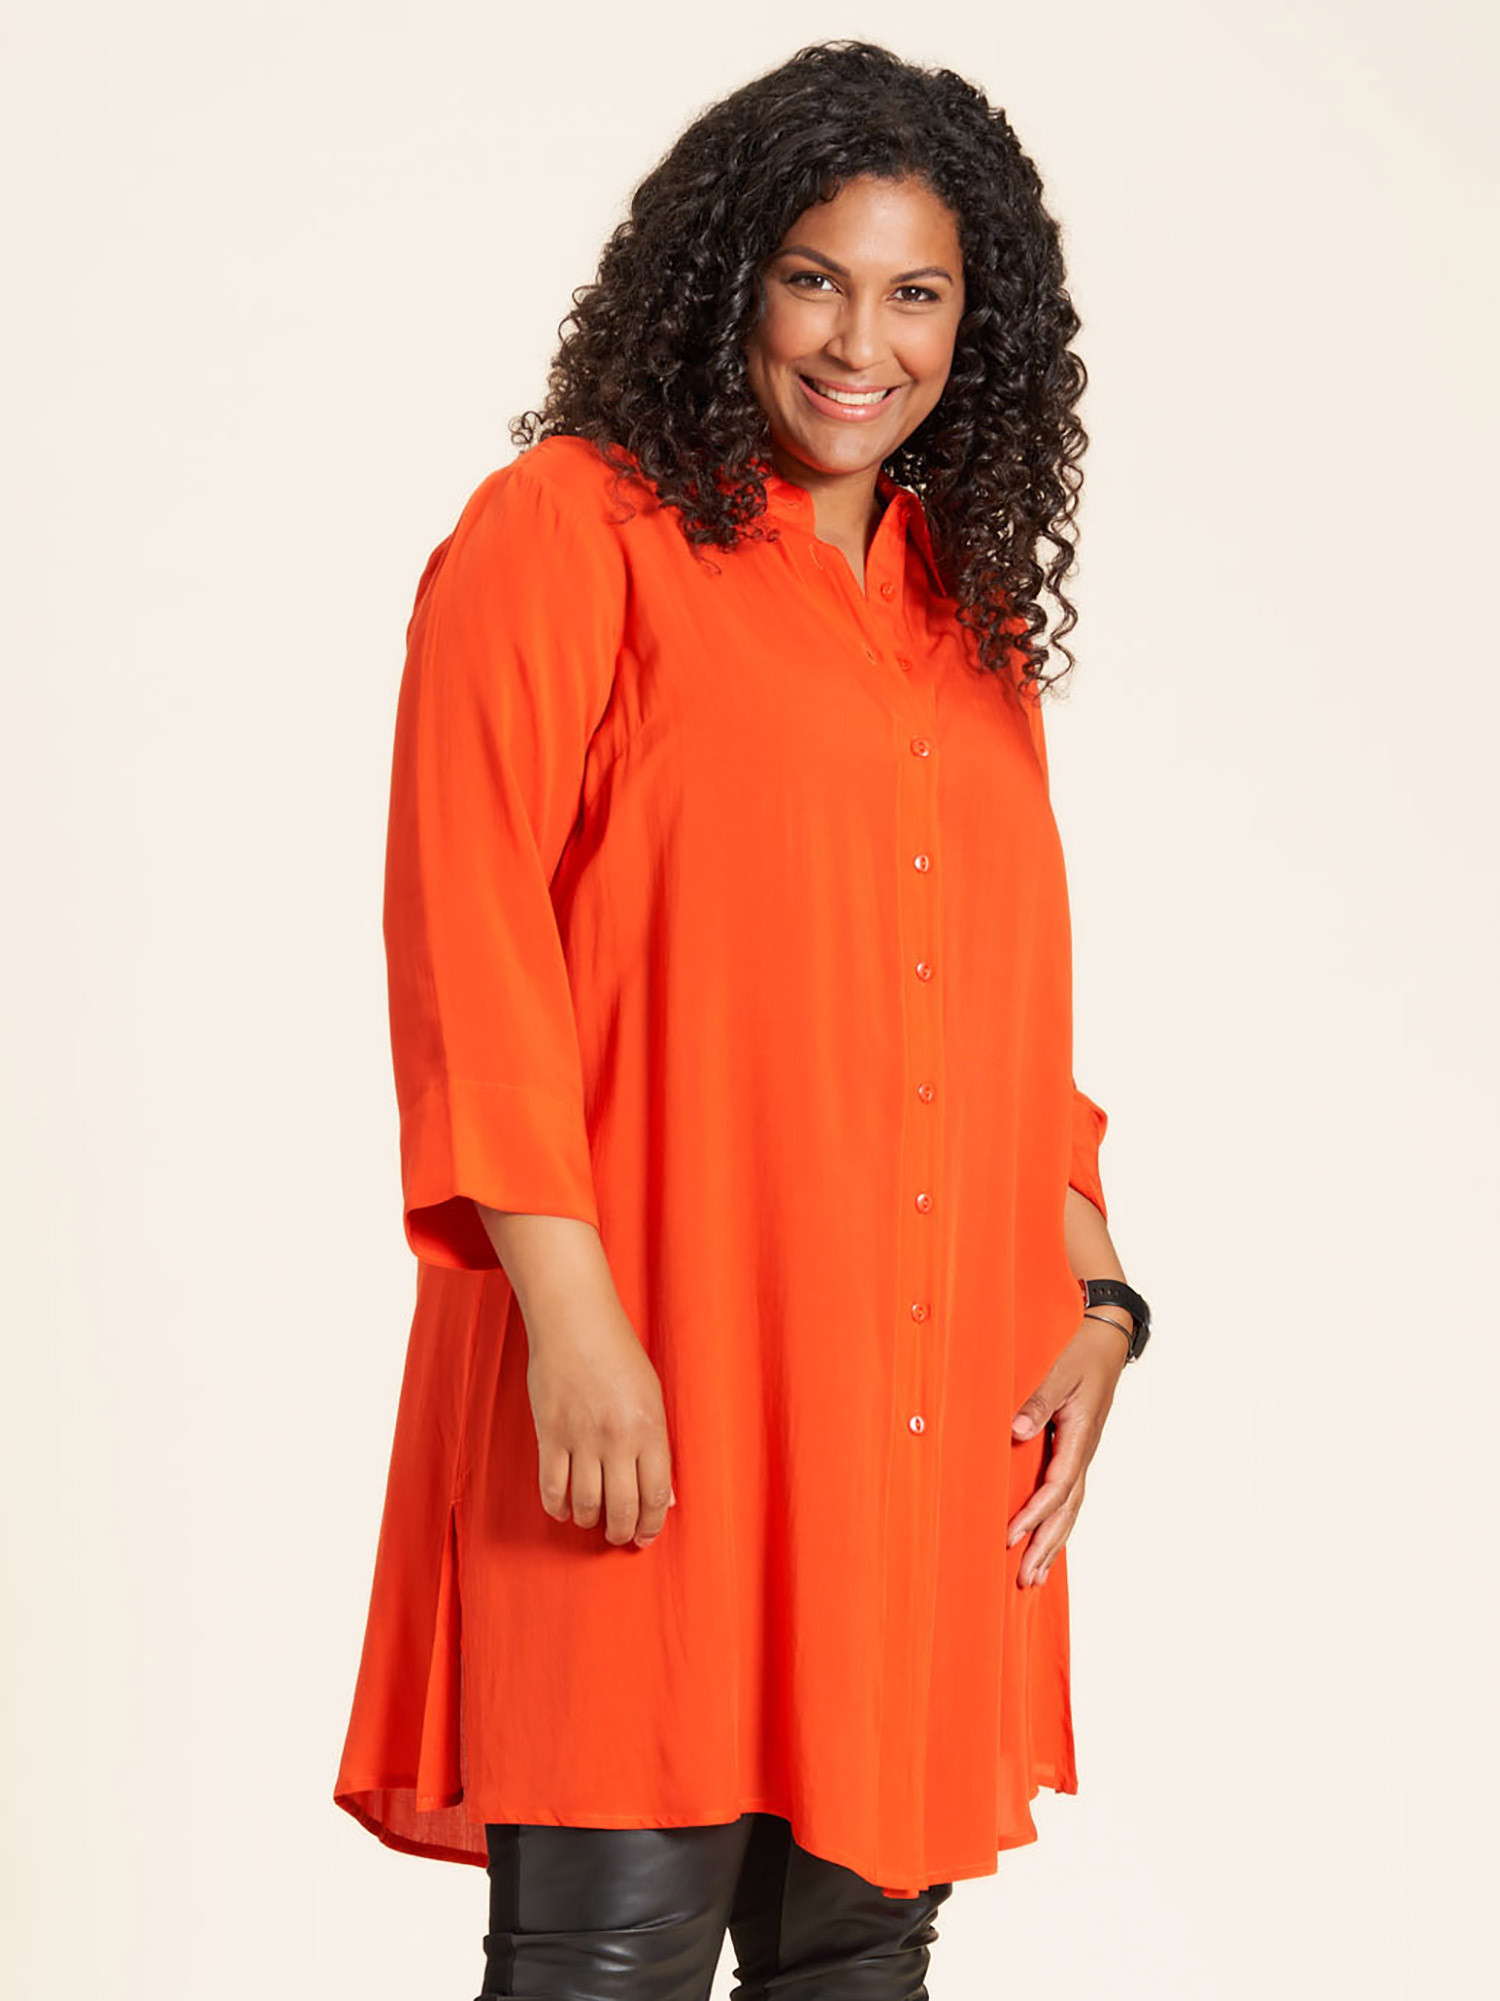 Carvanda - Flot orange viskose skjorte kjole